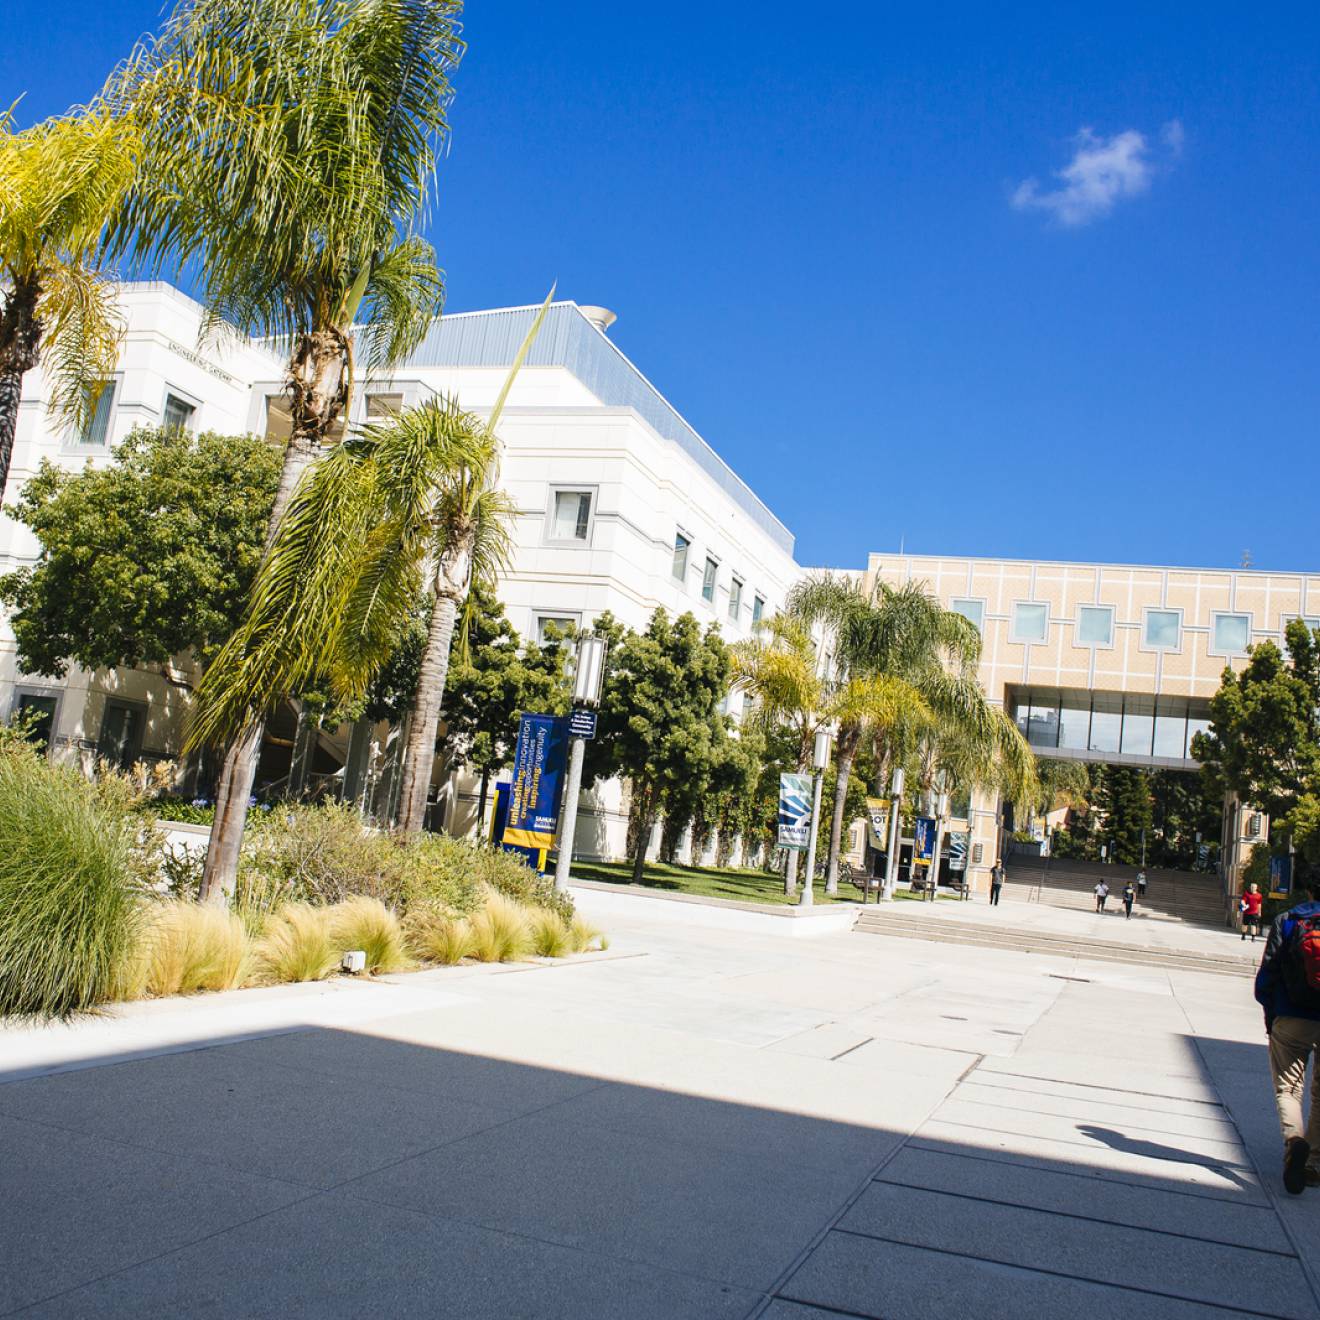 Student walks on wide pavement area of UC Irvine campus